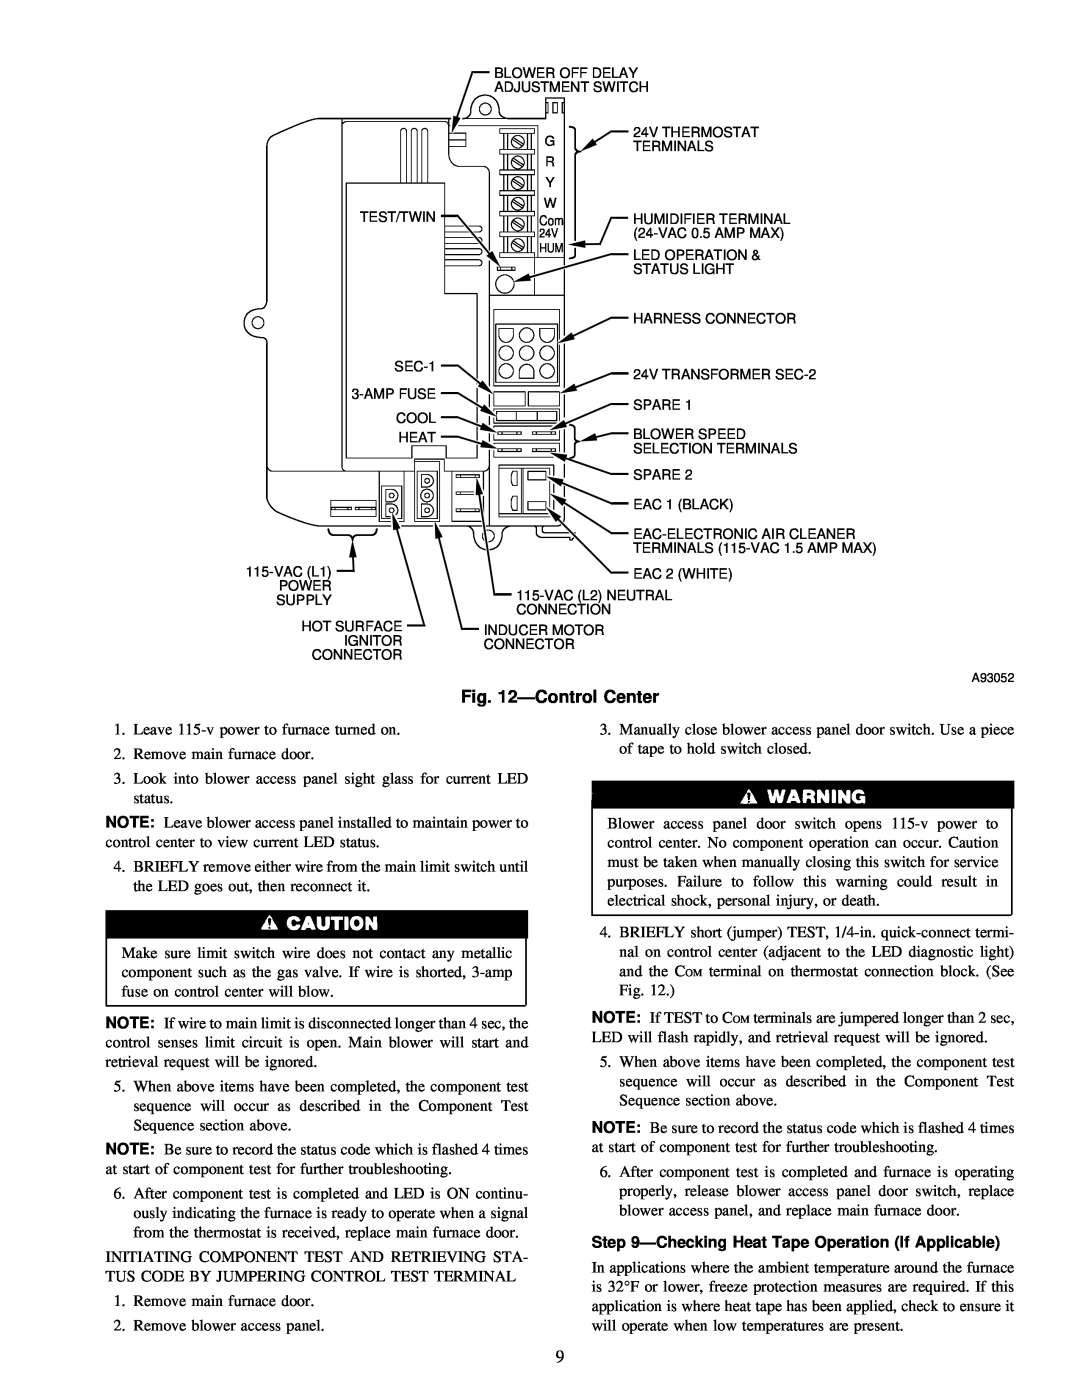 Carrier 58MXA instruction manual ÐControl Center, ÐChecking Heat Tape Operation If Applicable 